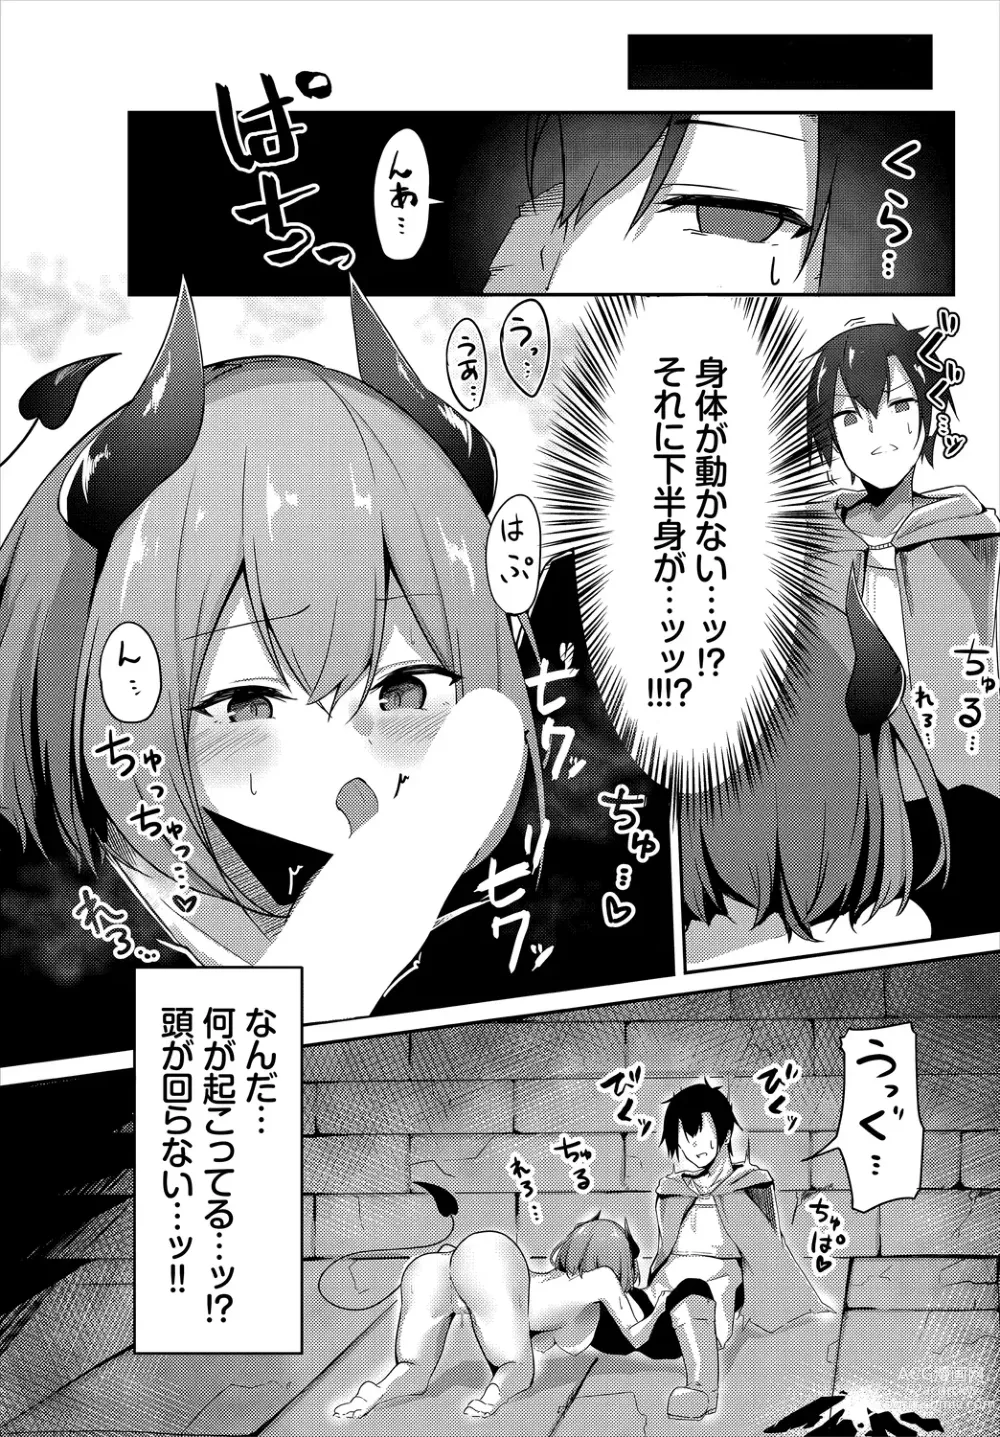 Page 9 of manga Meikyuu Lilac - Laberynth Lilac.